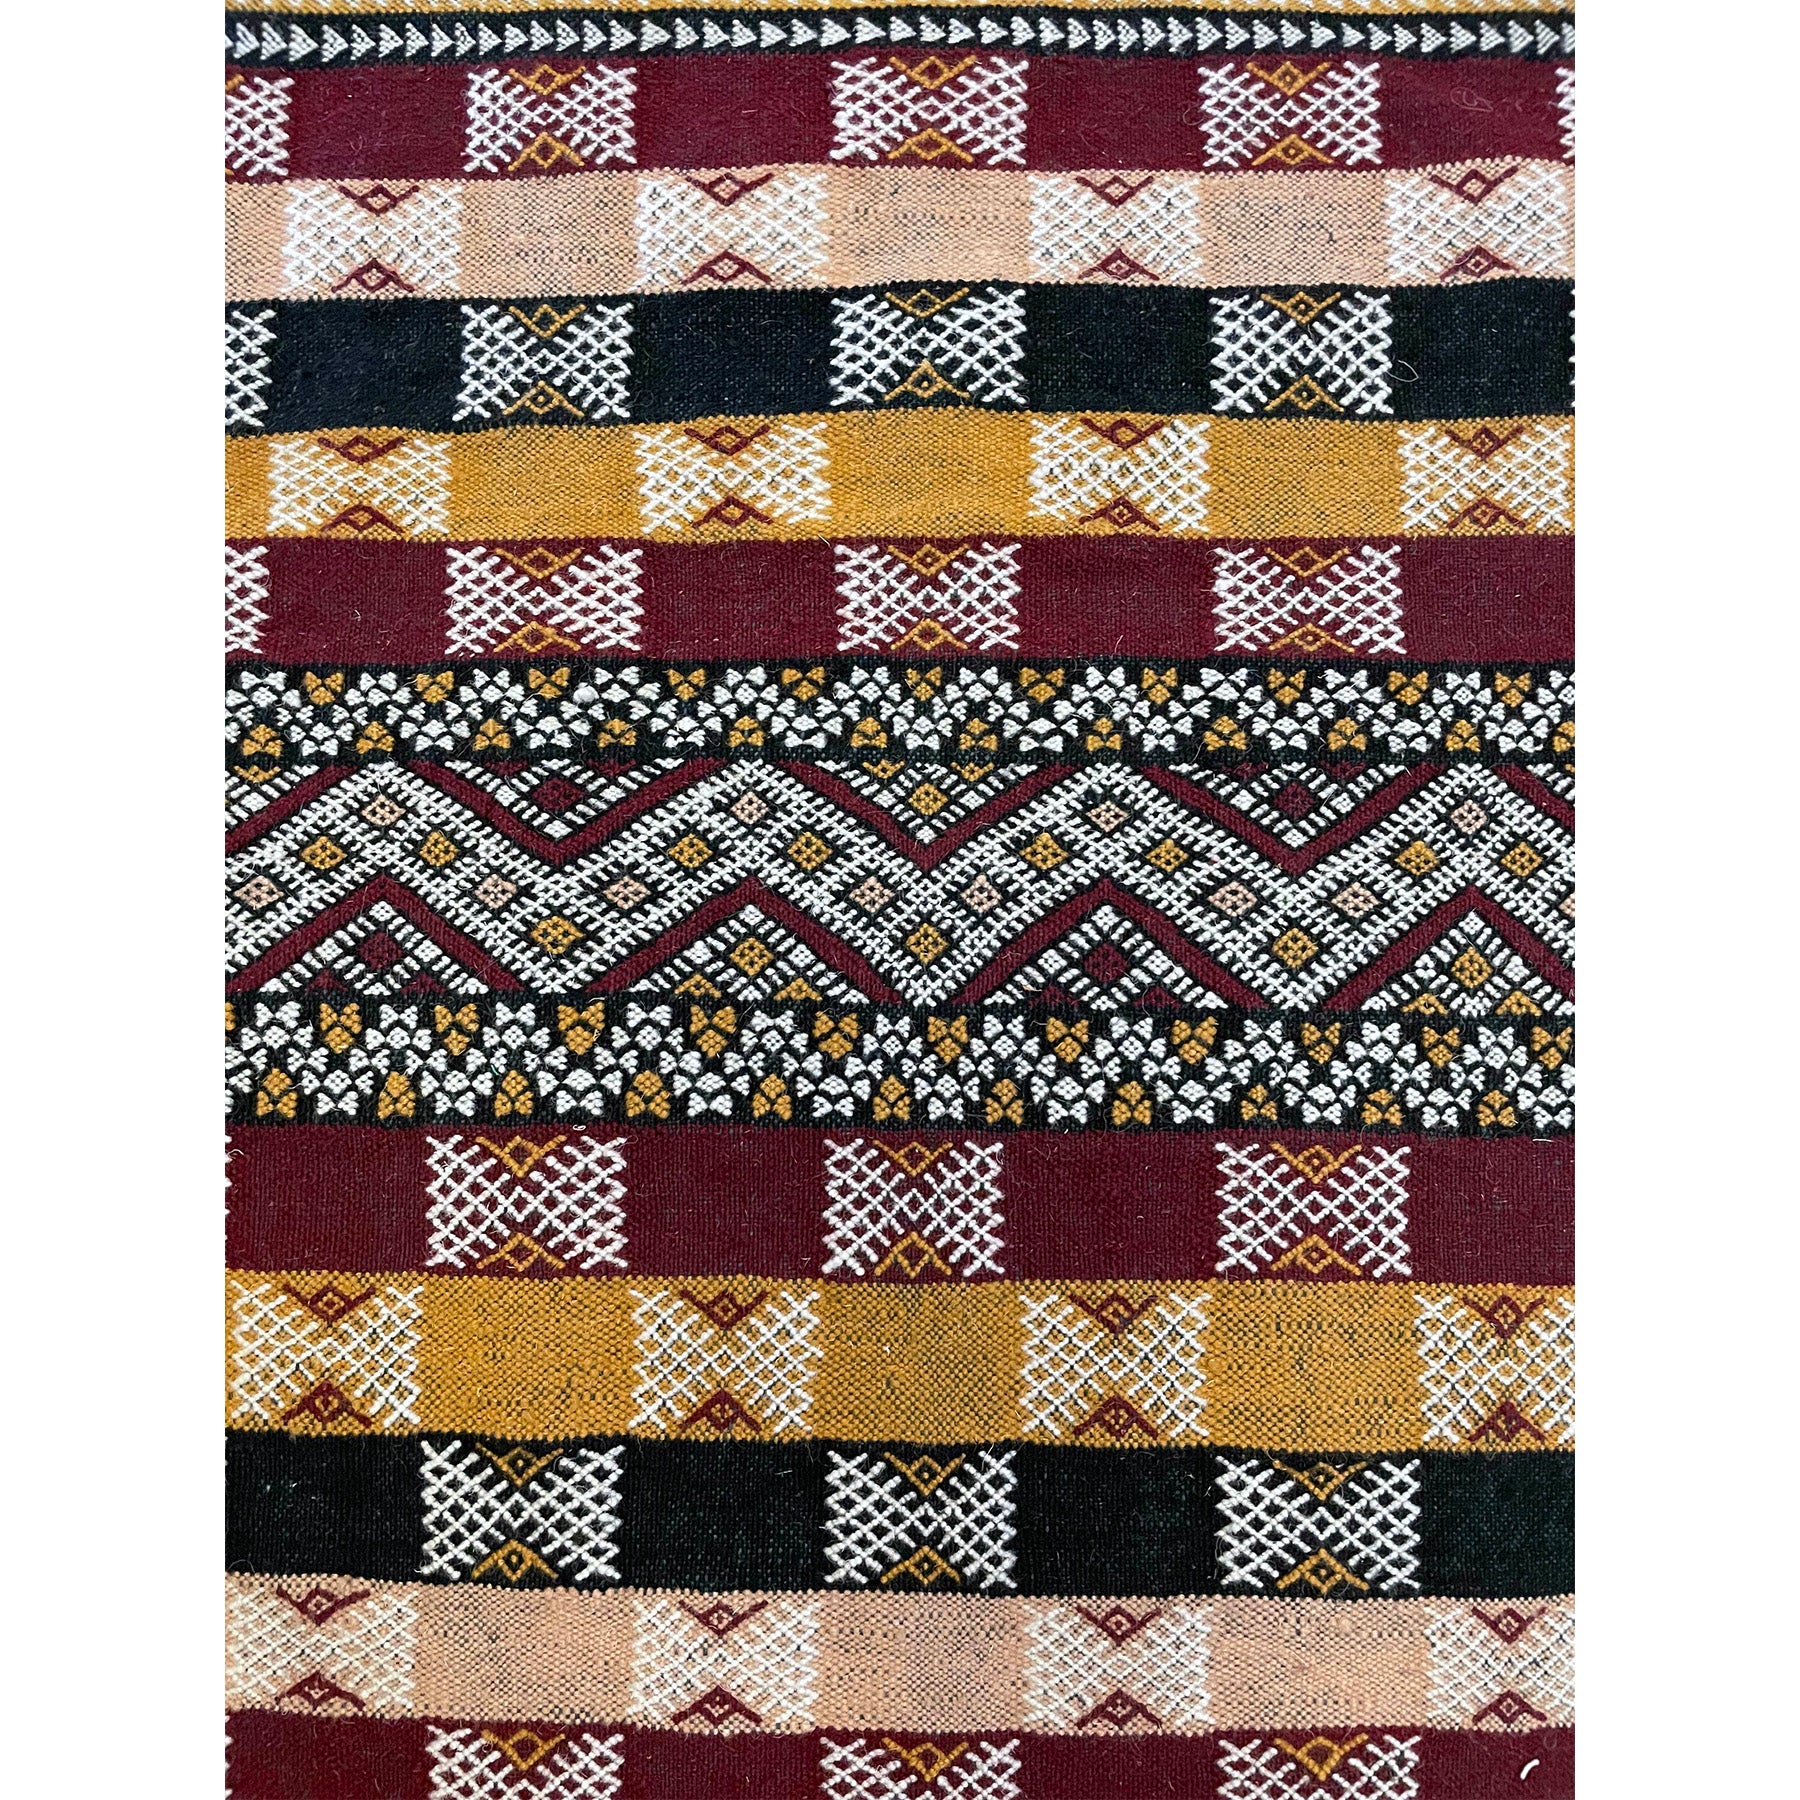 Red, gold, and black Moroccan flatweave living room rug - Kantara | Moroccan Rugs